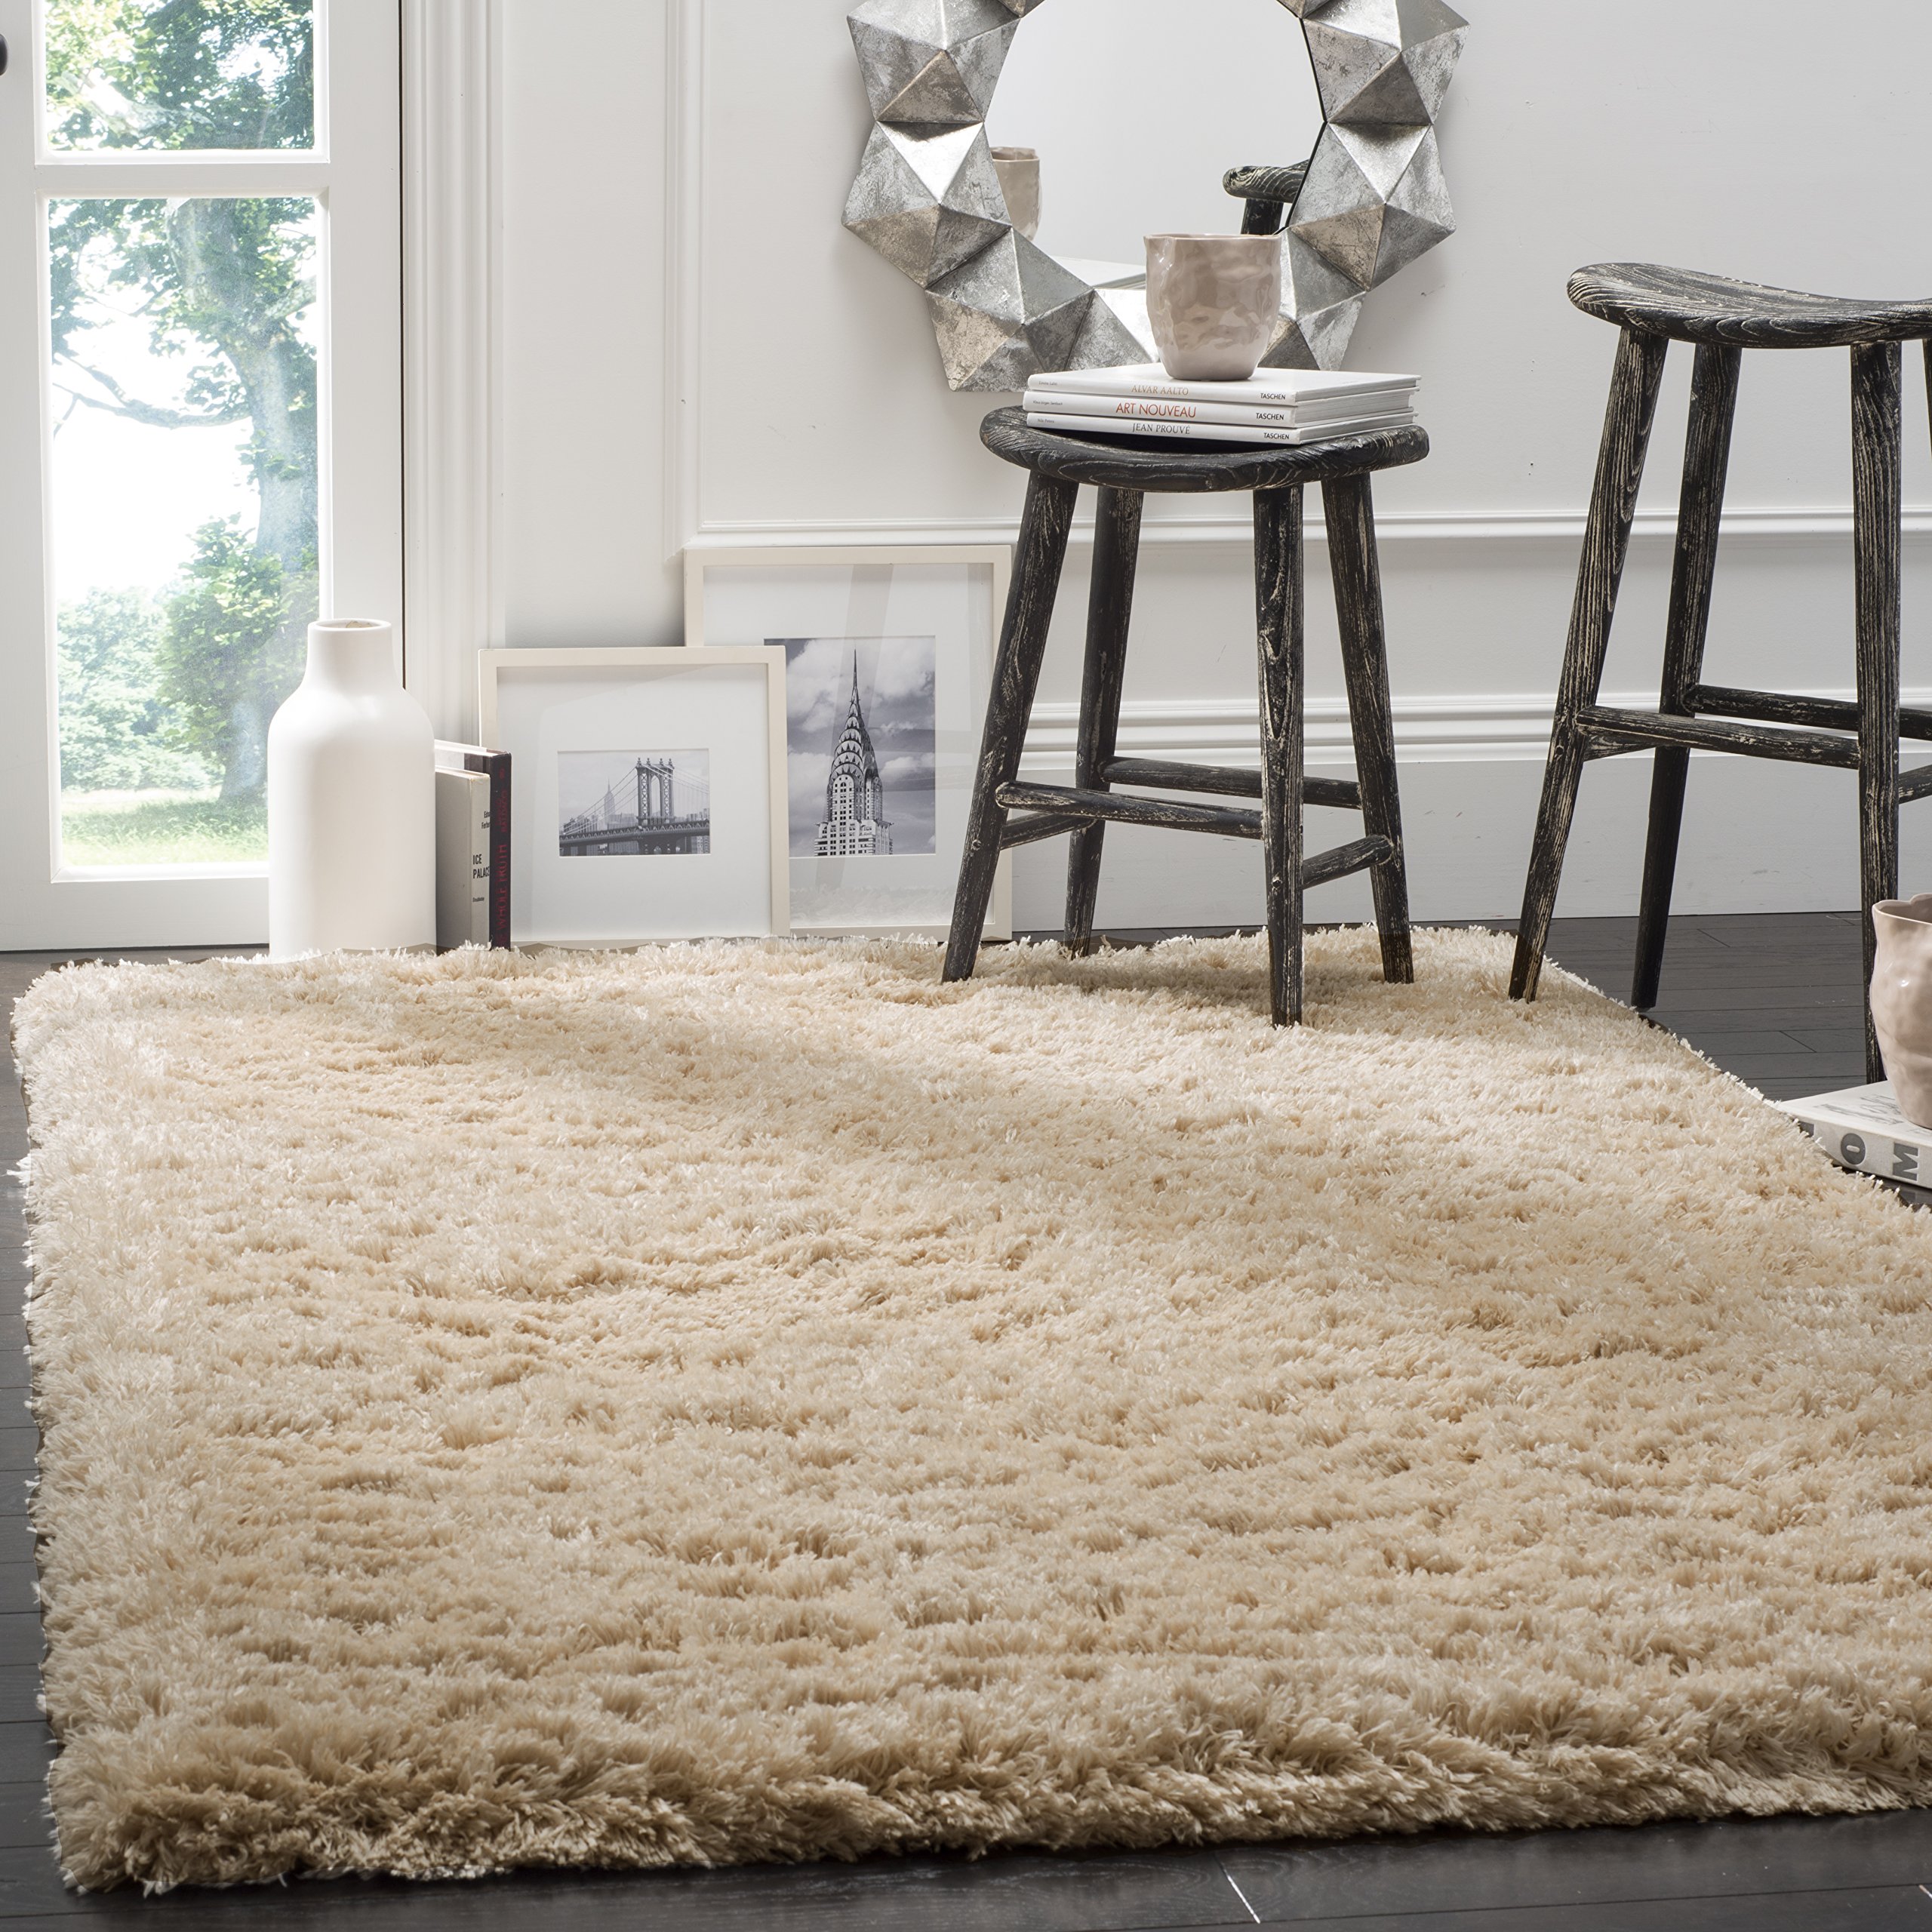 Safavieh Polar Shag 系列小地毯 - 10 英寸 x 14 英寸，浅米色，纯色迷人设计，不脱落且易于护理，3 英寸厚，非常适合客厅、卧室的人流密集区域 (PSG800A)